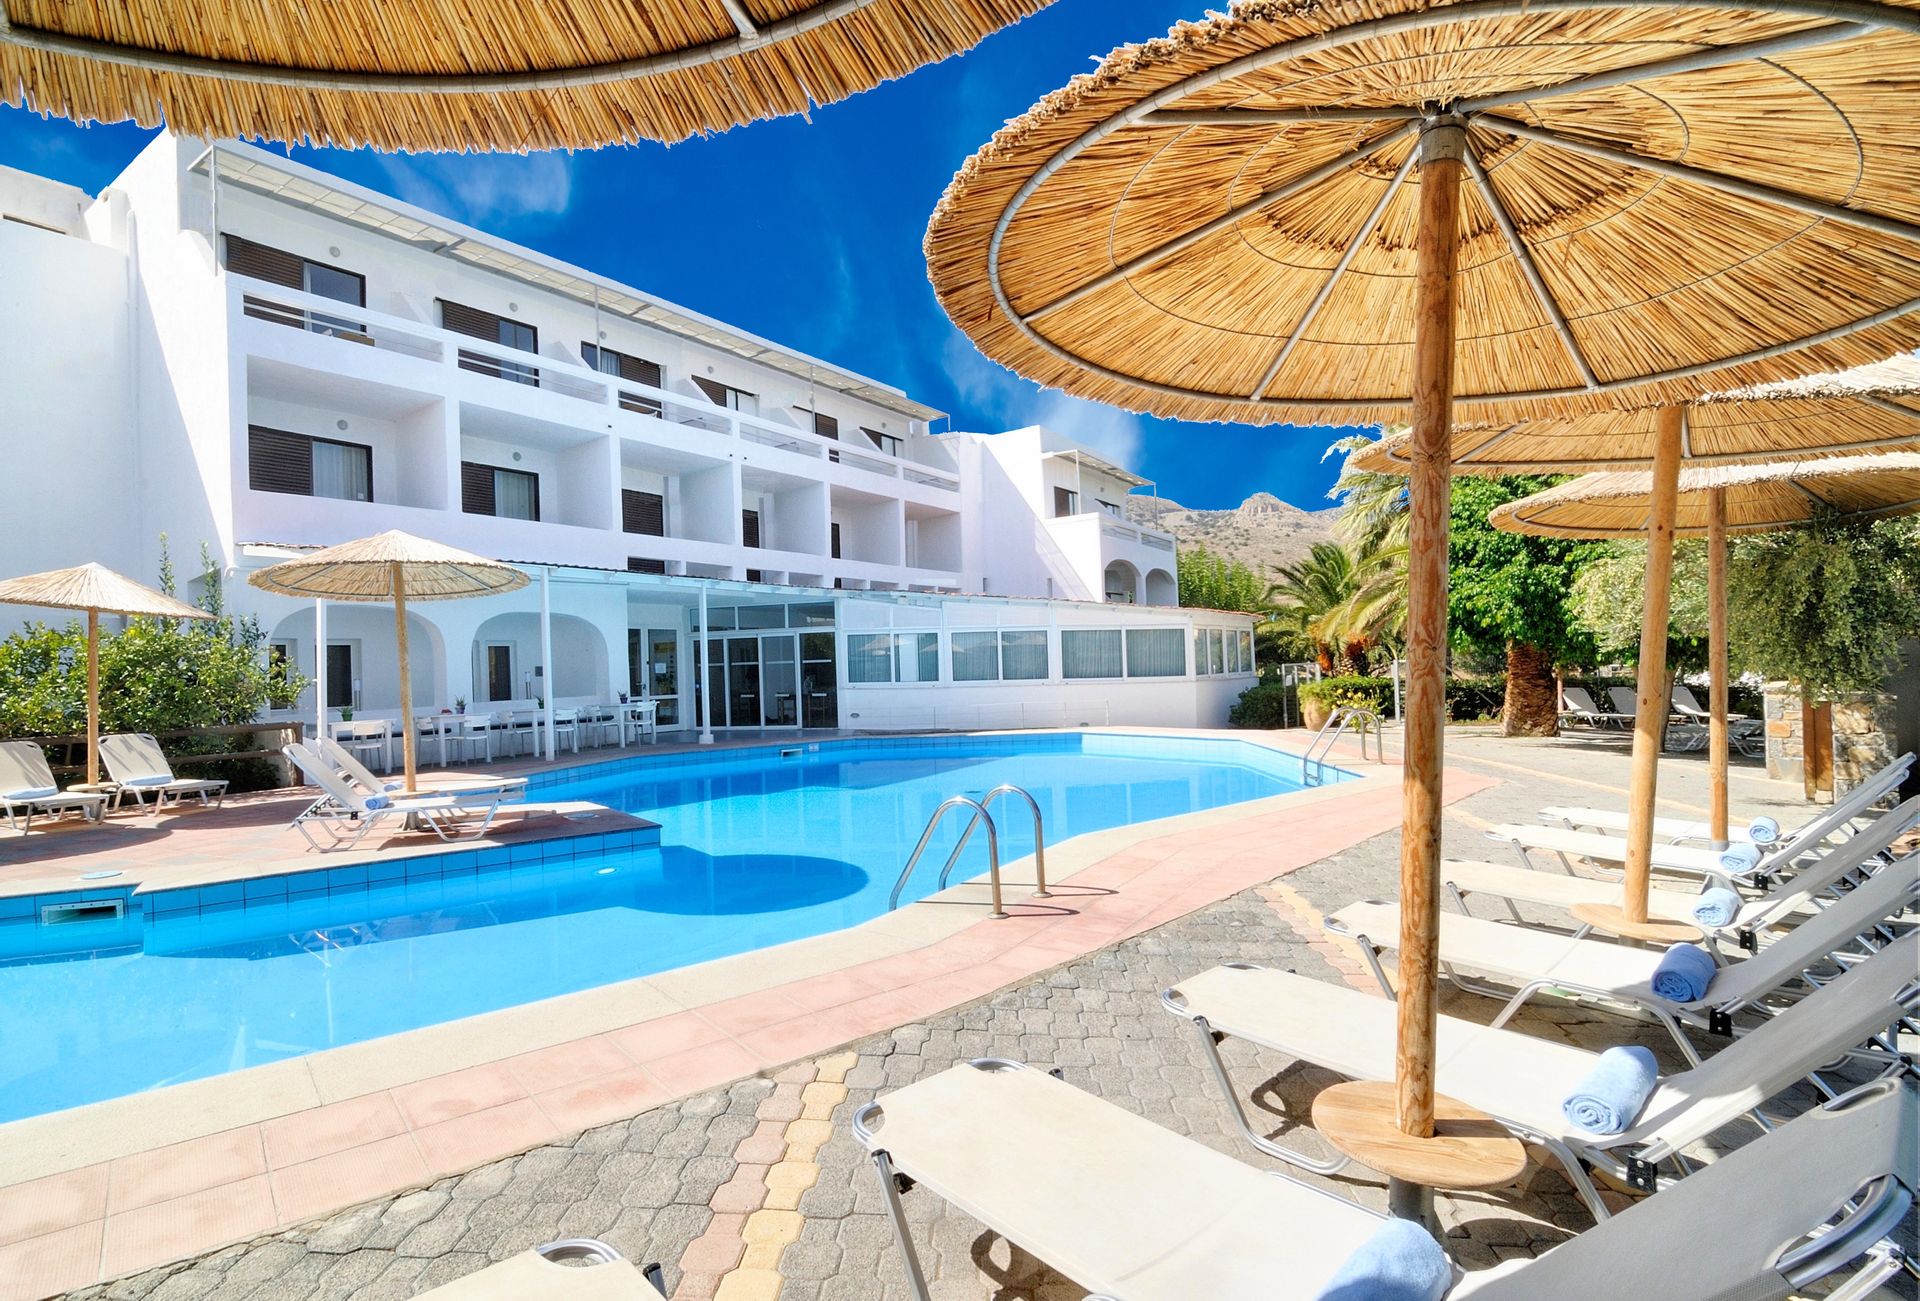 Elounda Krini Hotel - Λασίθι, Κρήτη ✦ 2 Ημέρες (1 Διανυκτέρευση) ✦ 2 άτομα ✦ 1 ✦ 01/05/2022 έως 30/09/2022 ✦ Κοντά στην Παραλία!